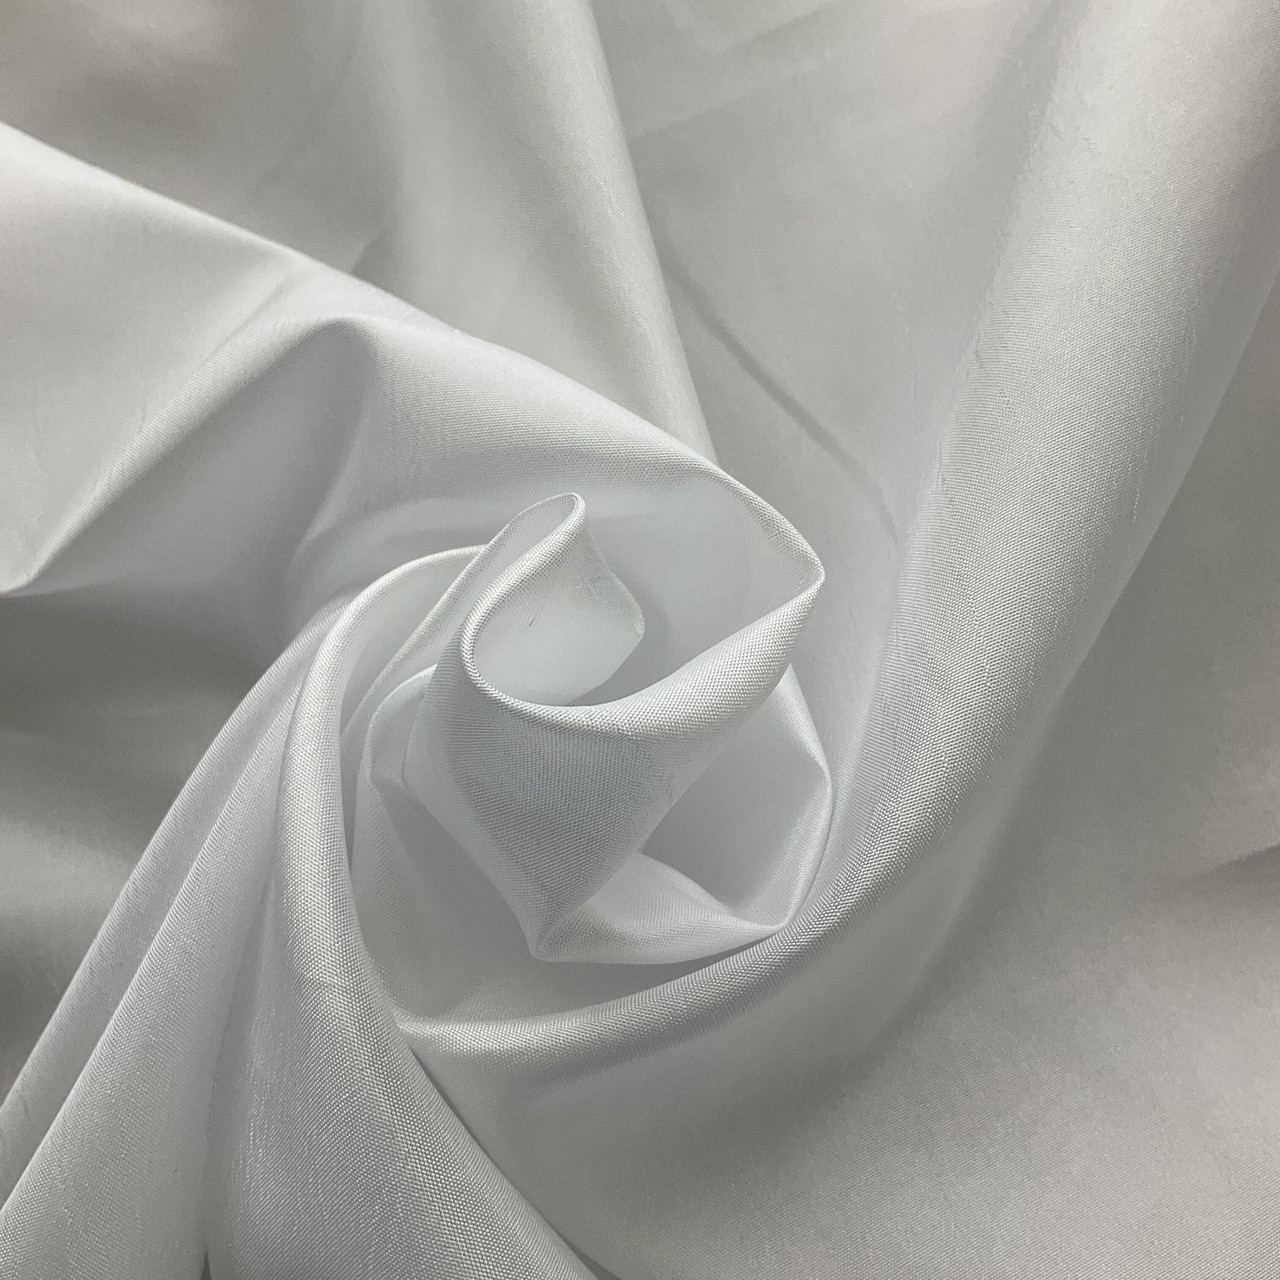 110 Nylon Taffeta White, Very Lightweight Taffeta Fabric